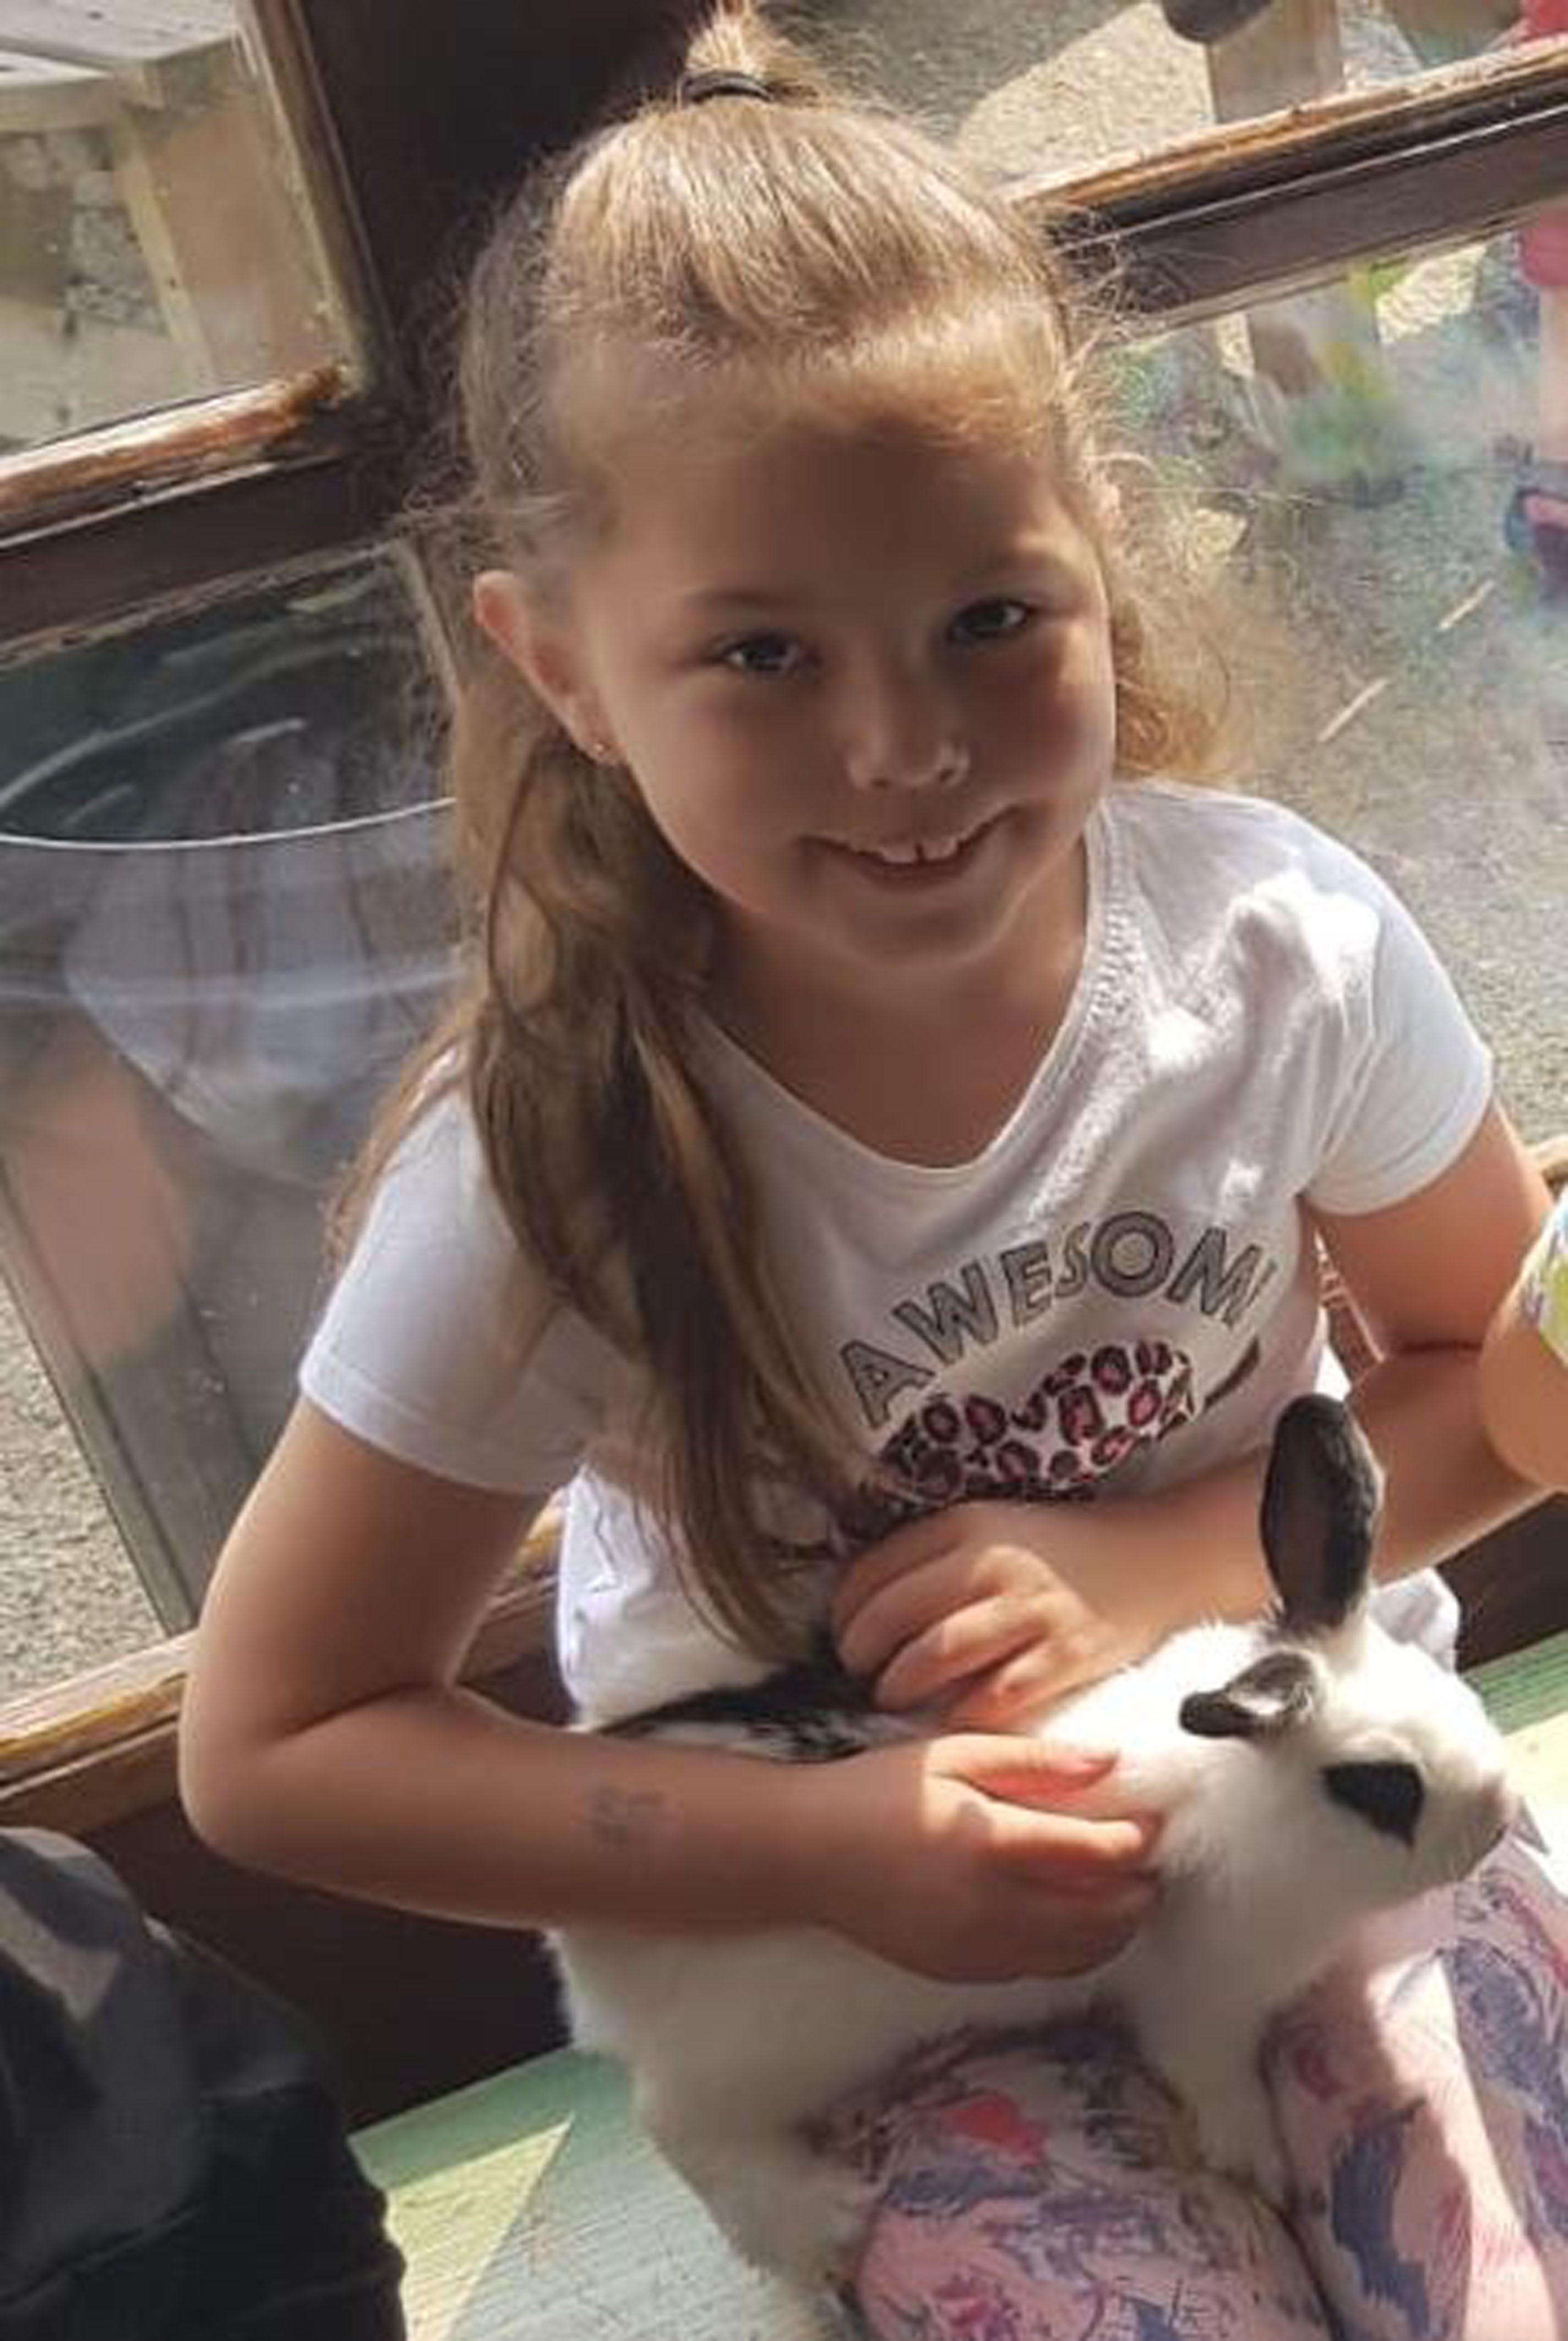 Nine-year-old Olivia Pratt-Korbel was shot dead in her house